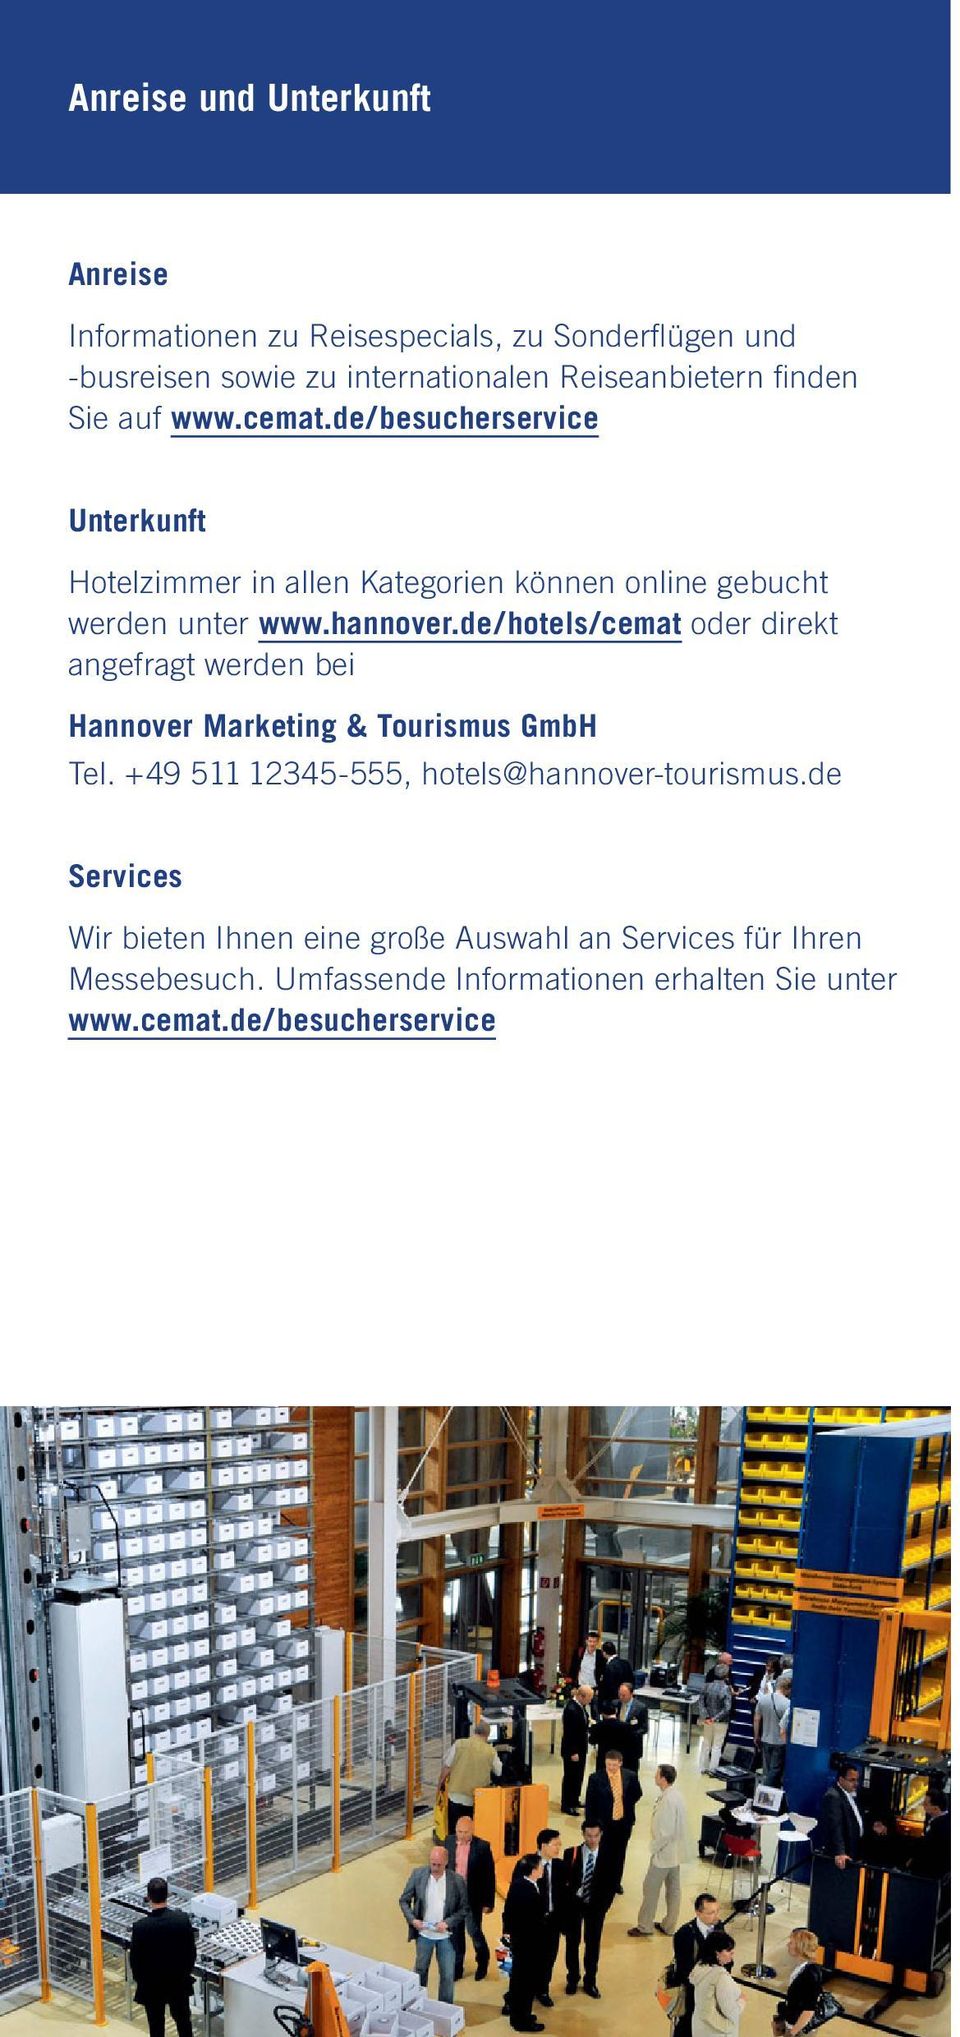 de/hotels/cemat oder direkt angefragt werden bei Hannover Marketing & Tourismus GmbH Tel. +49 511 12345-555, hotels@hannover-tourismus.